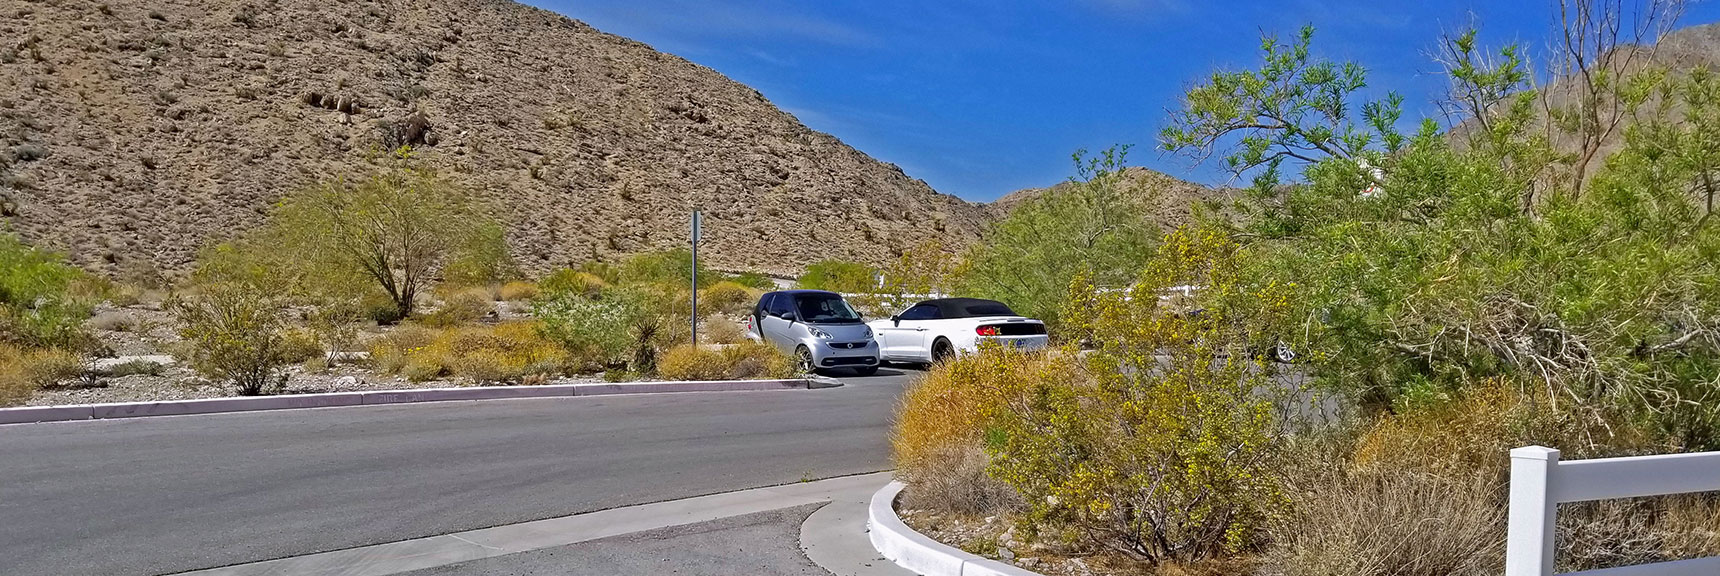 Return to "The Beast" Parked at Cliff Shadows Buckskin Park | Cheyenne Mountain | Las Vegas, Nevada